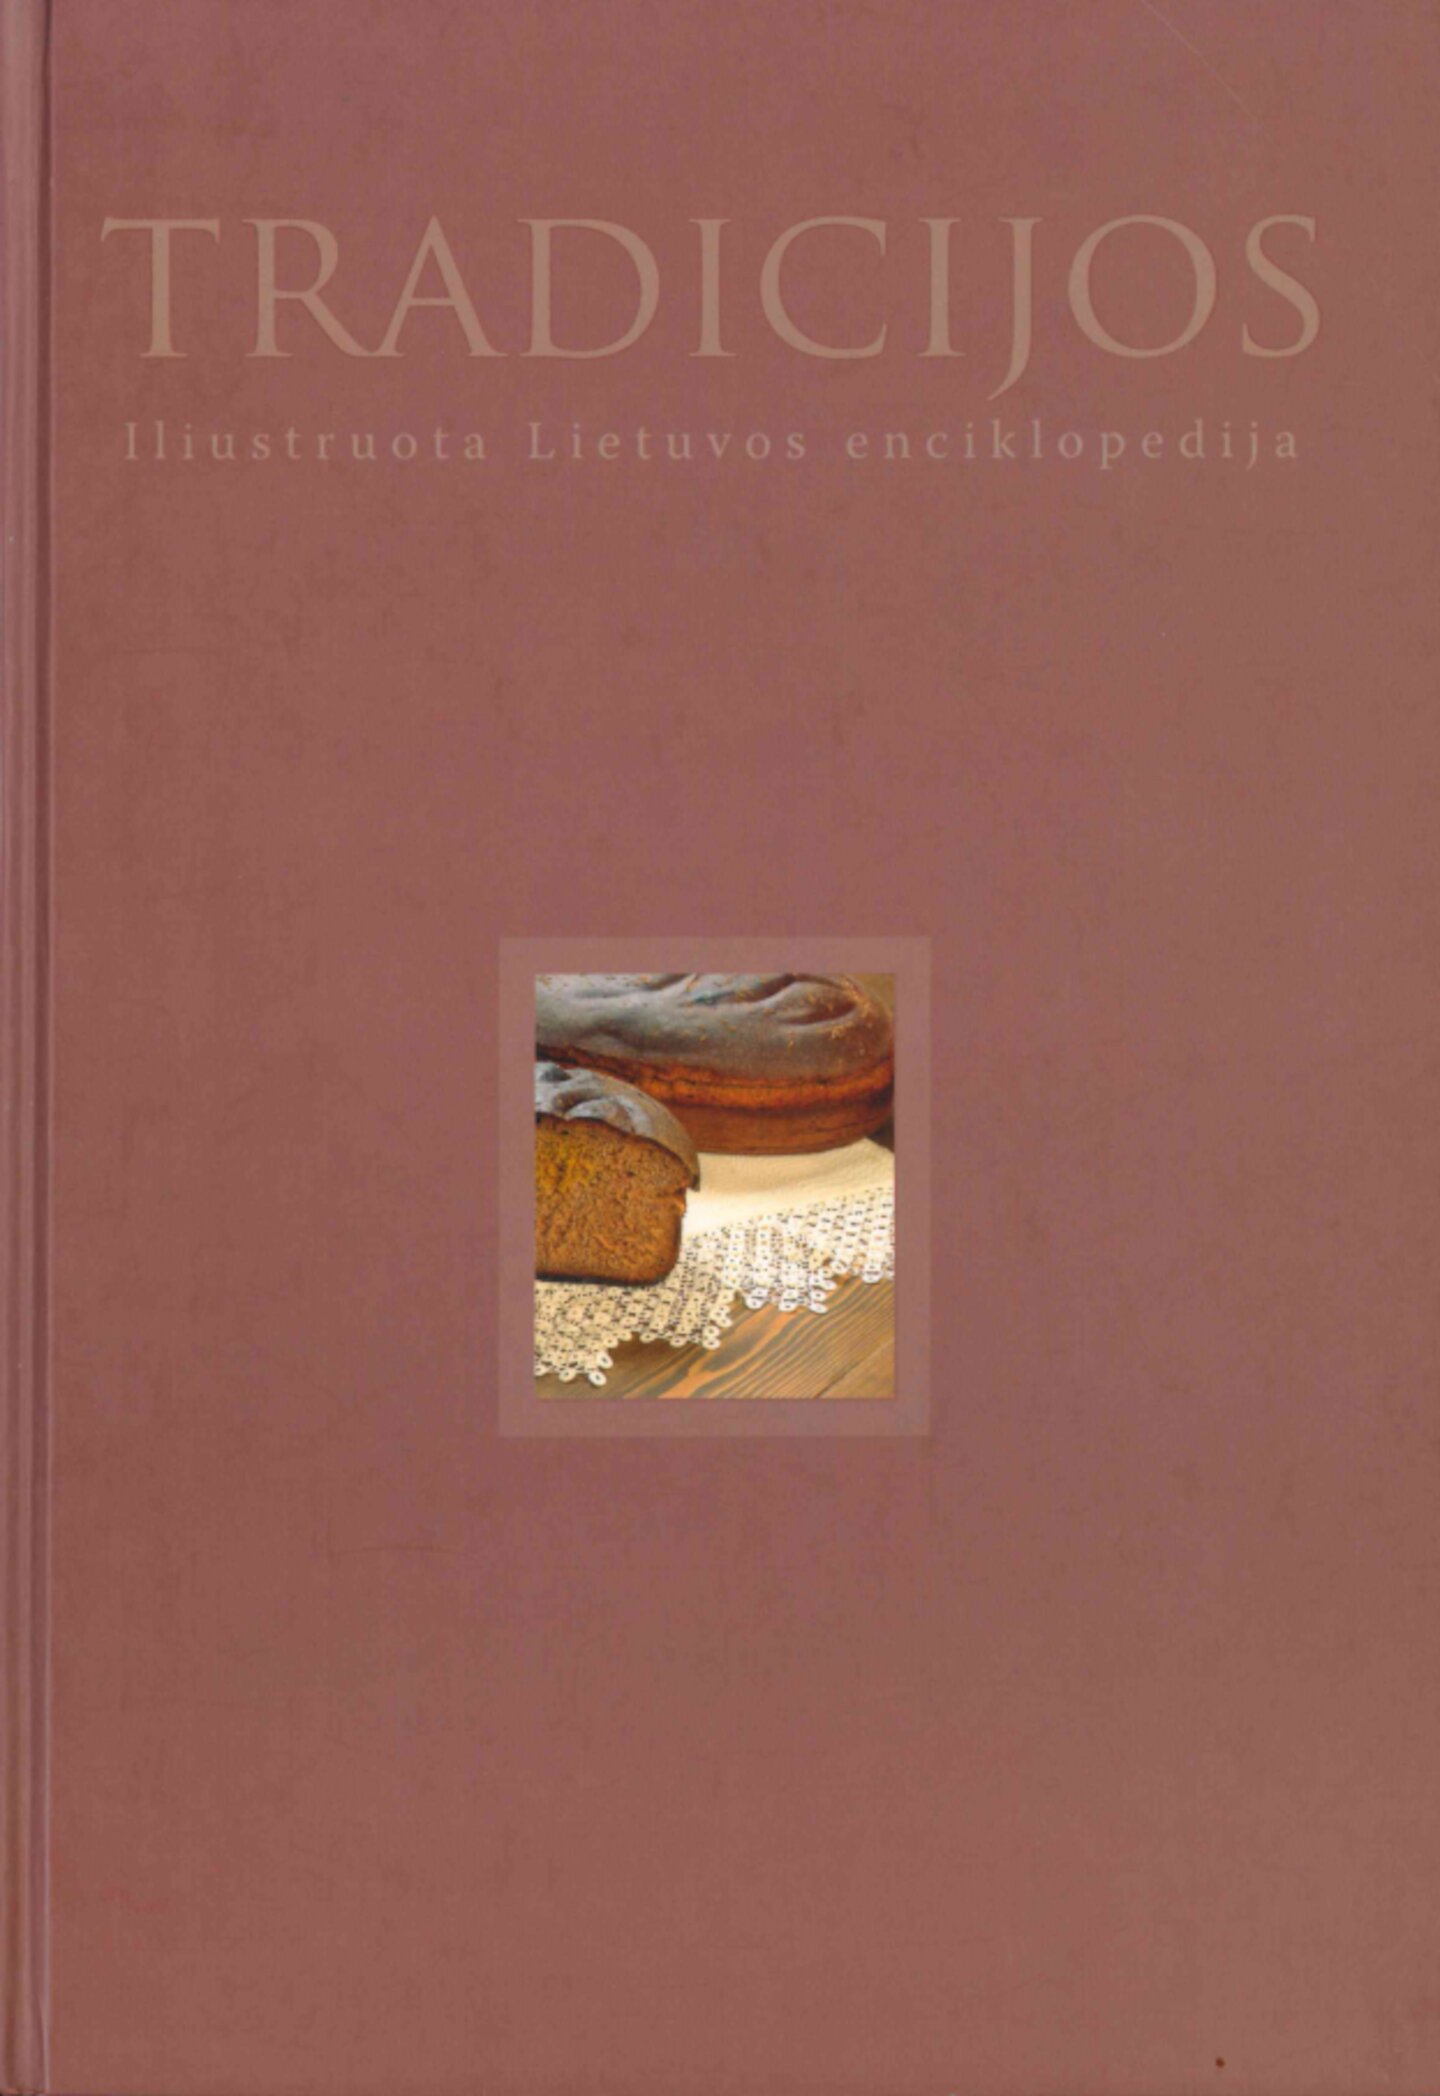 Tradicijos-2005-Iliustruota-Lietuvos-enciklopedija